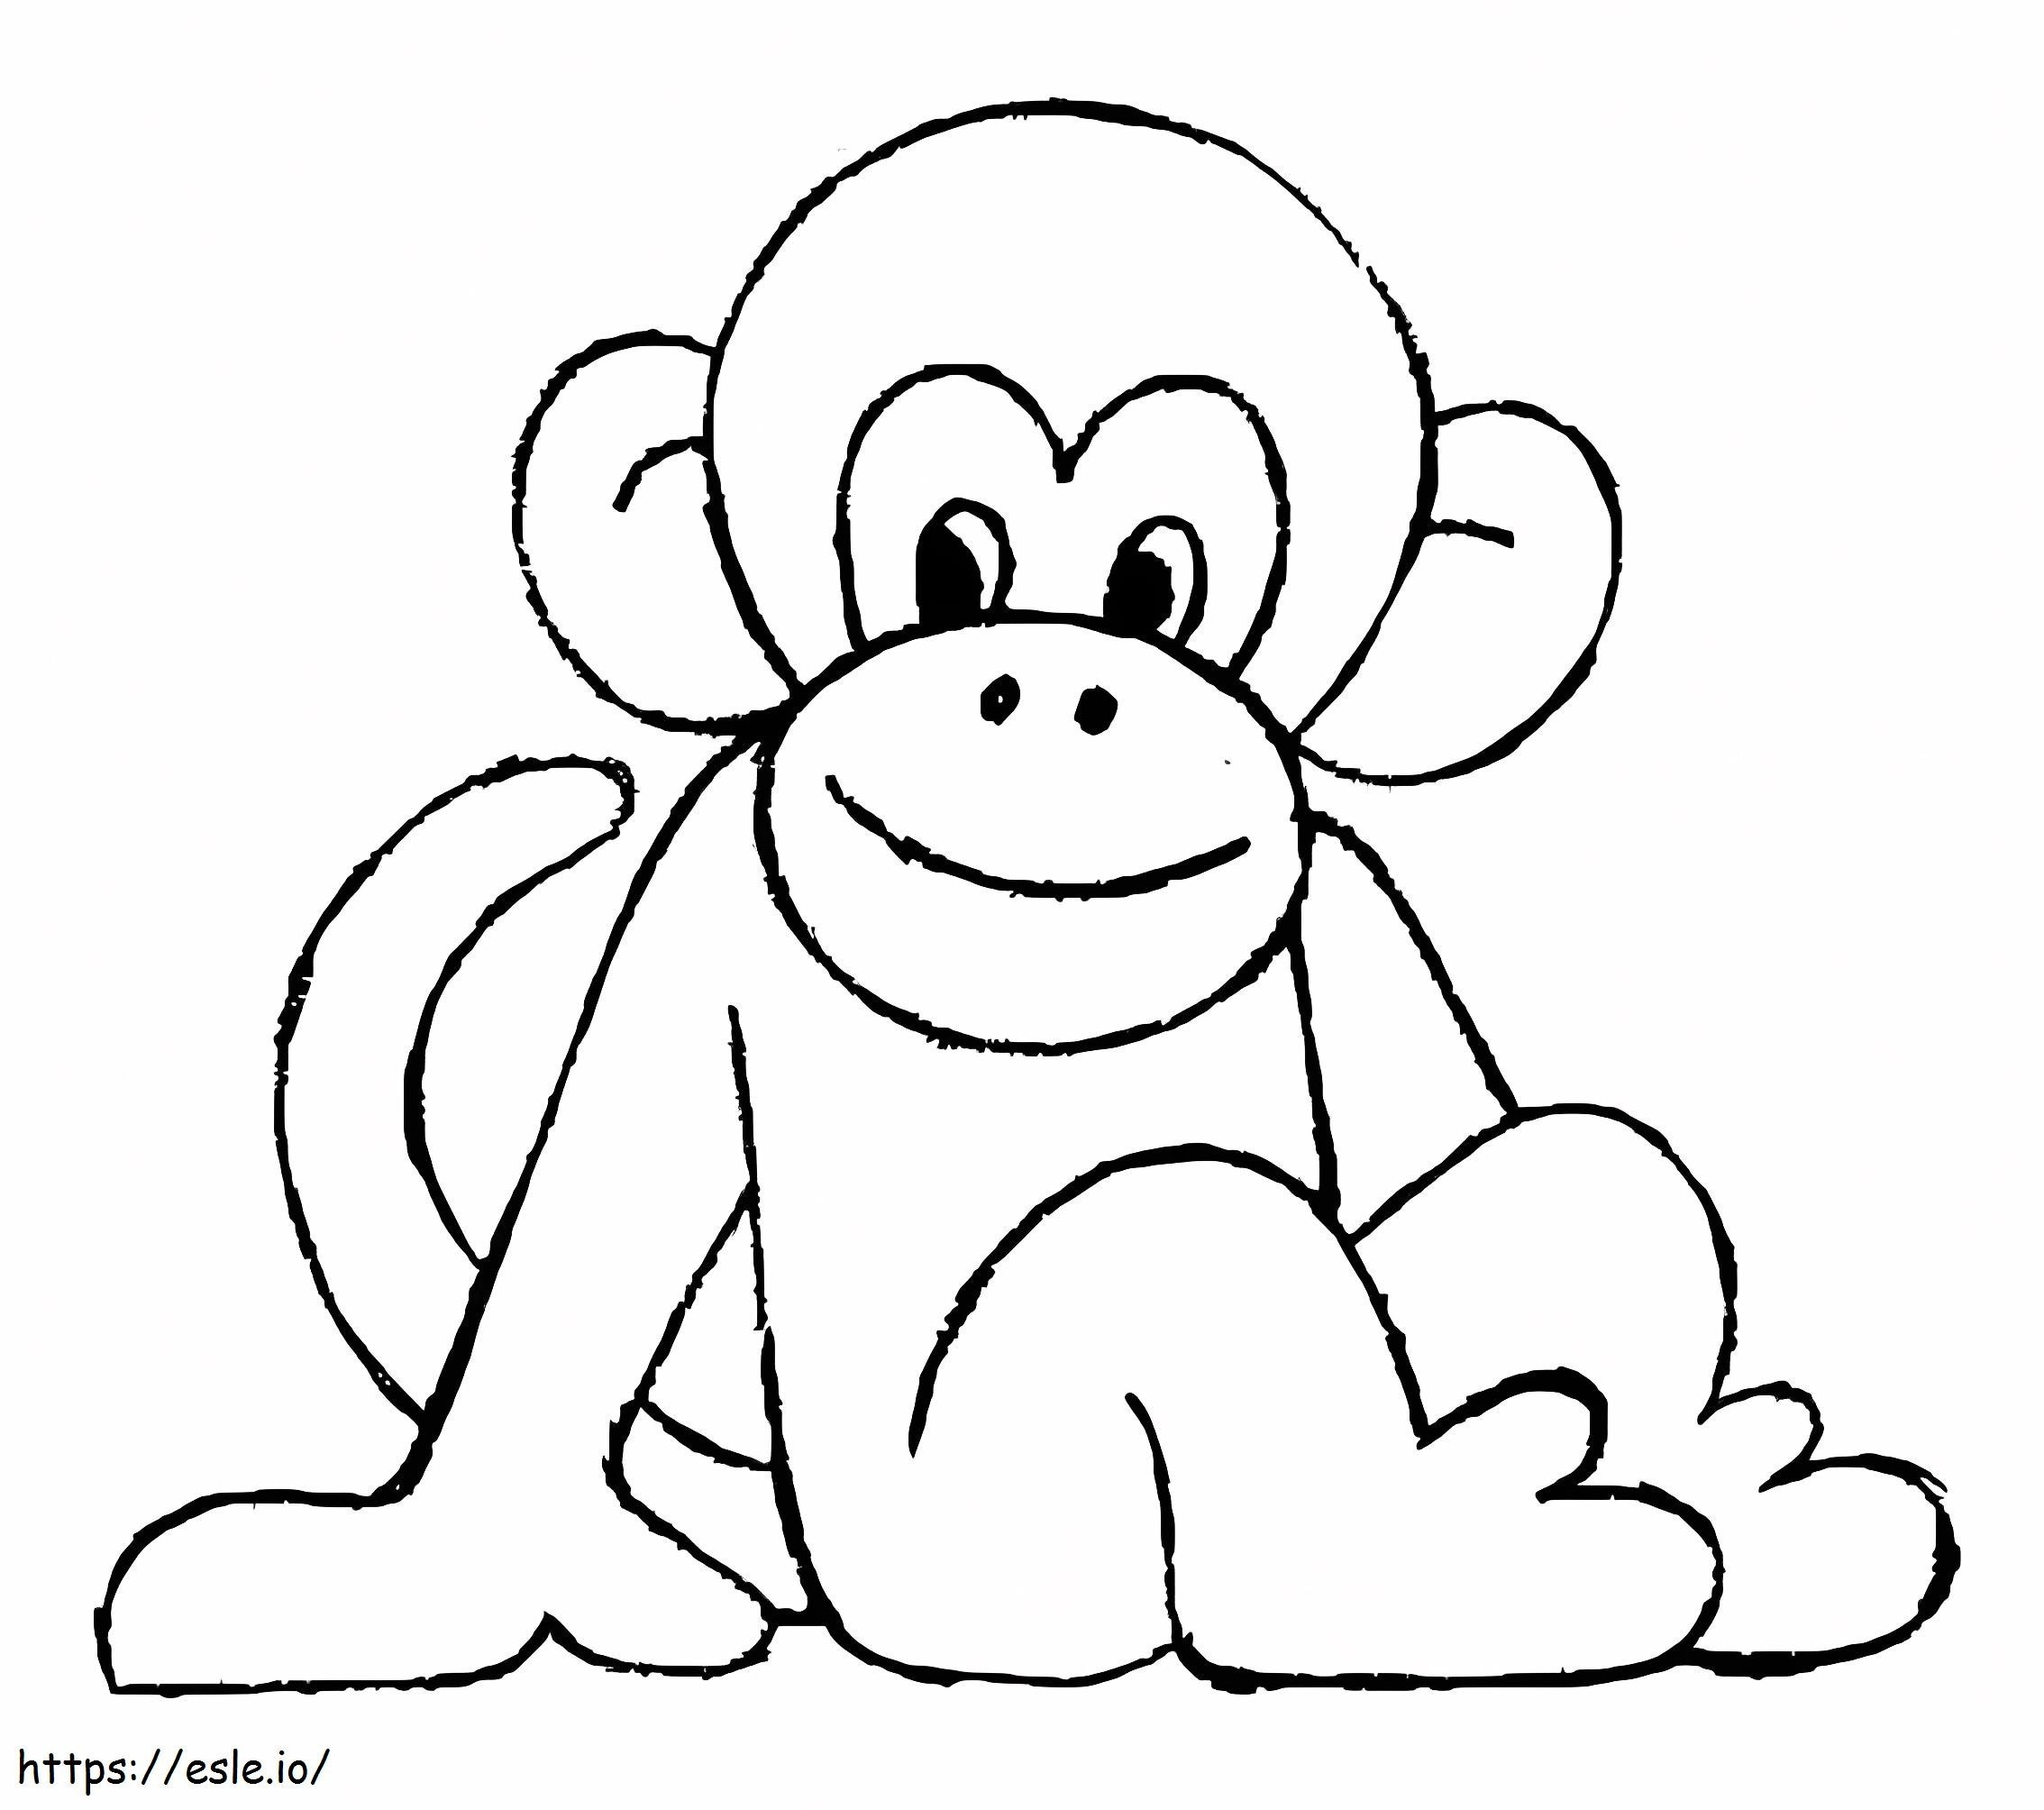 Macaco simples para colorir - Imprimir Desenhos